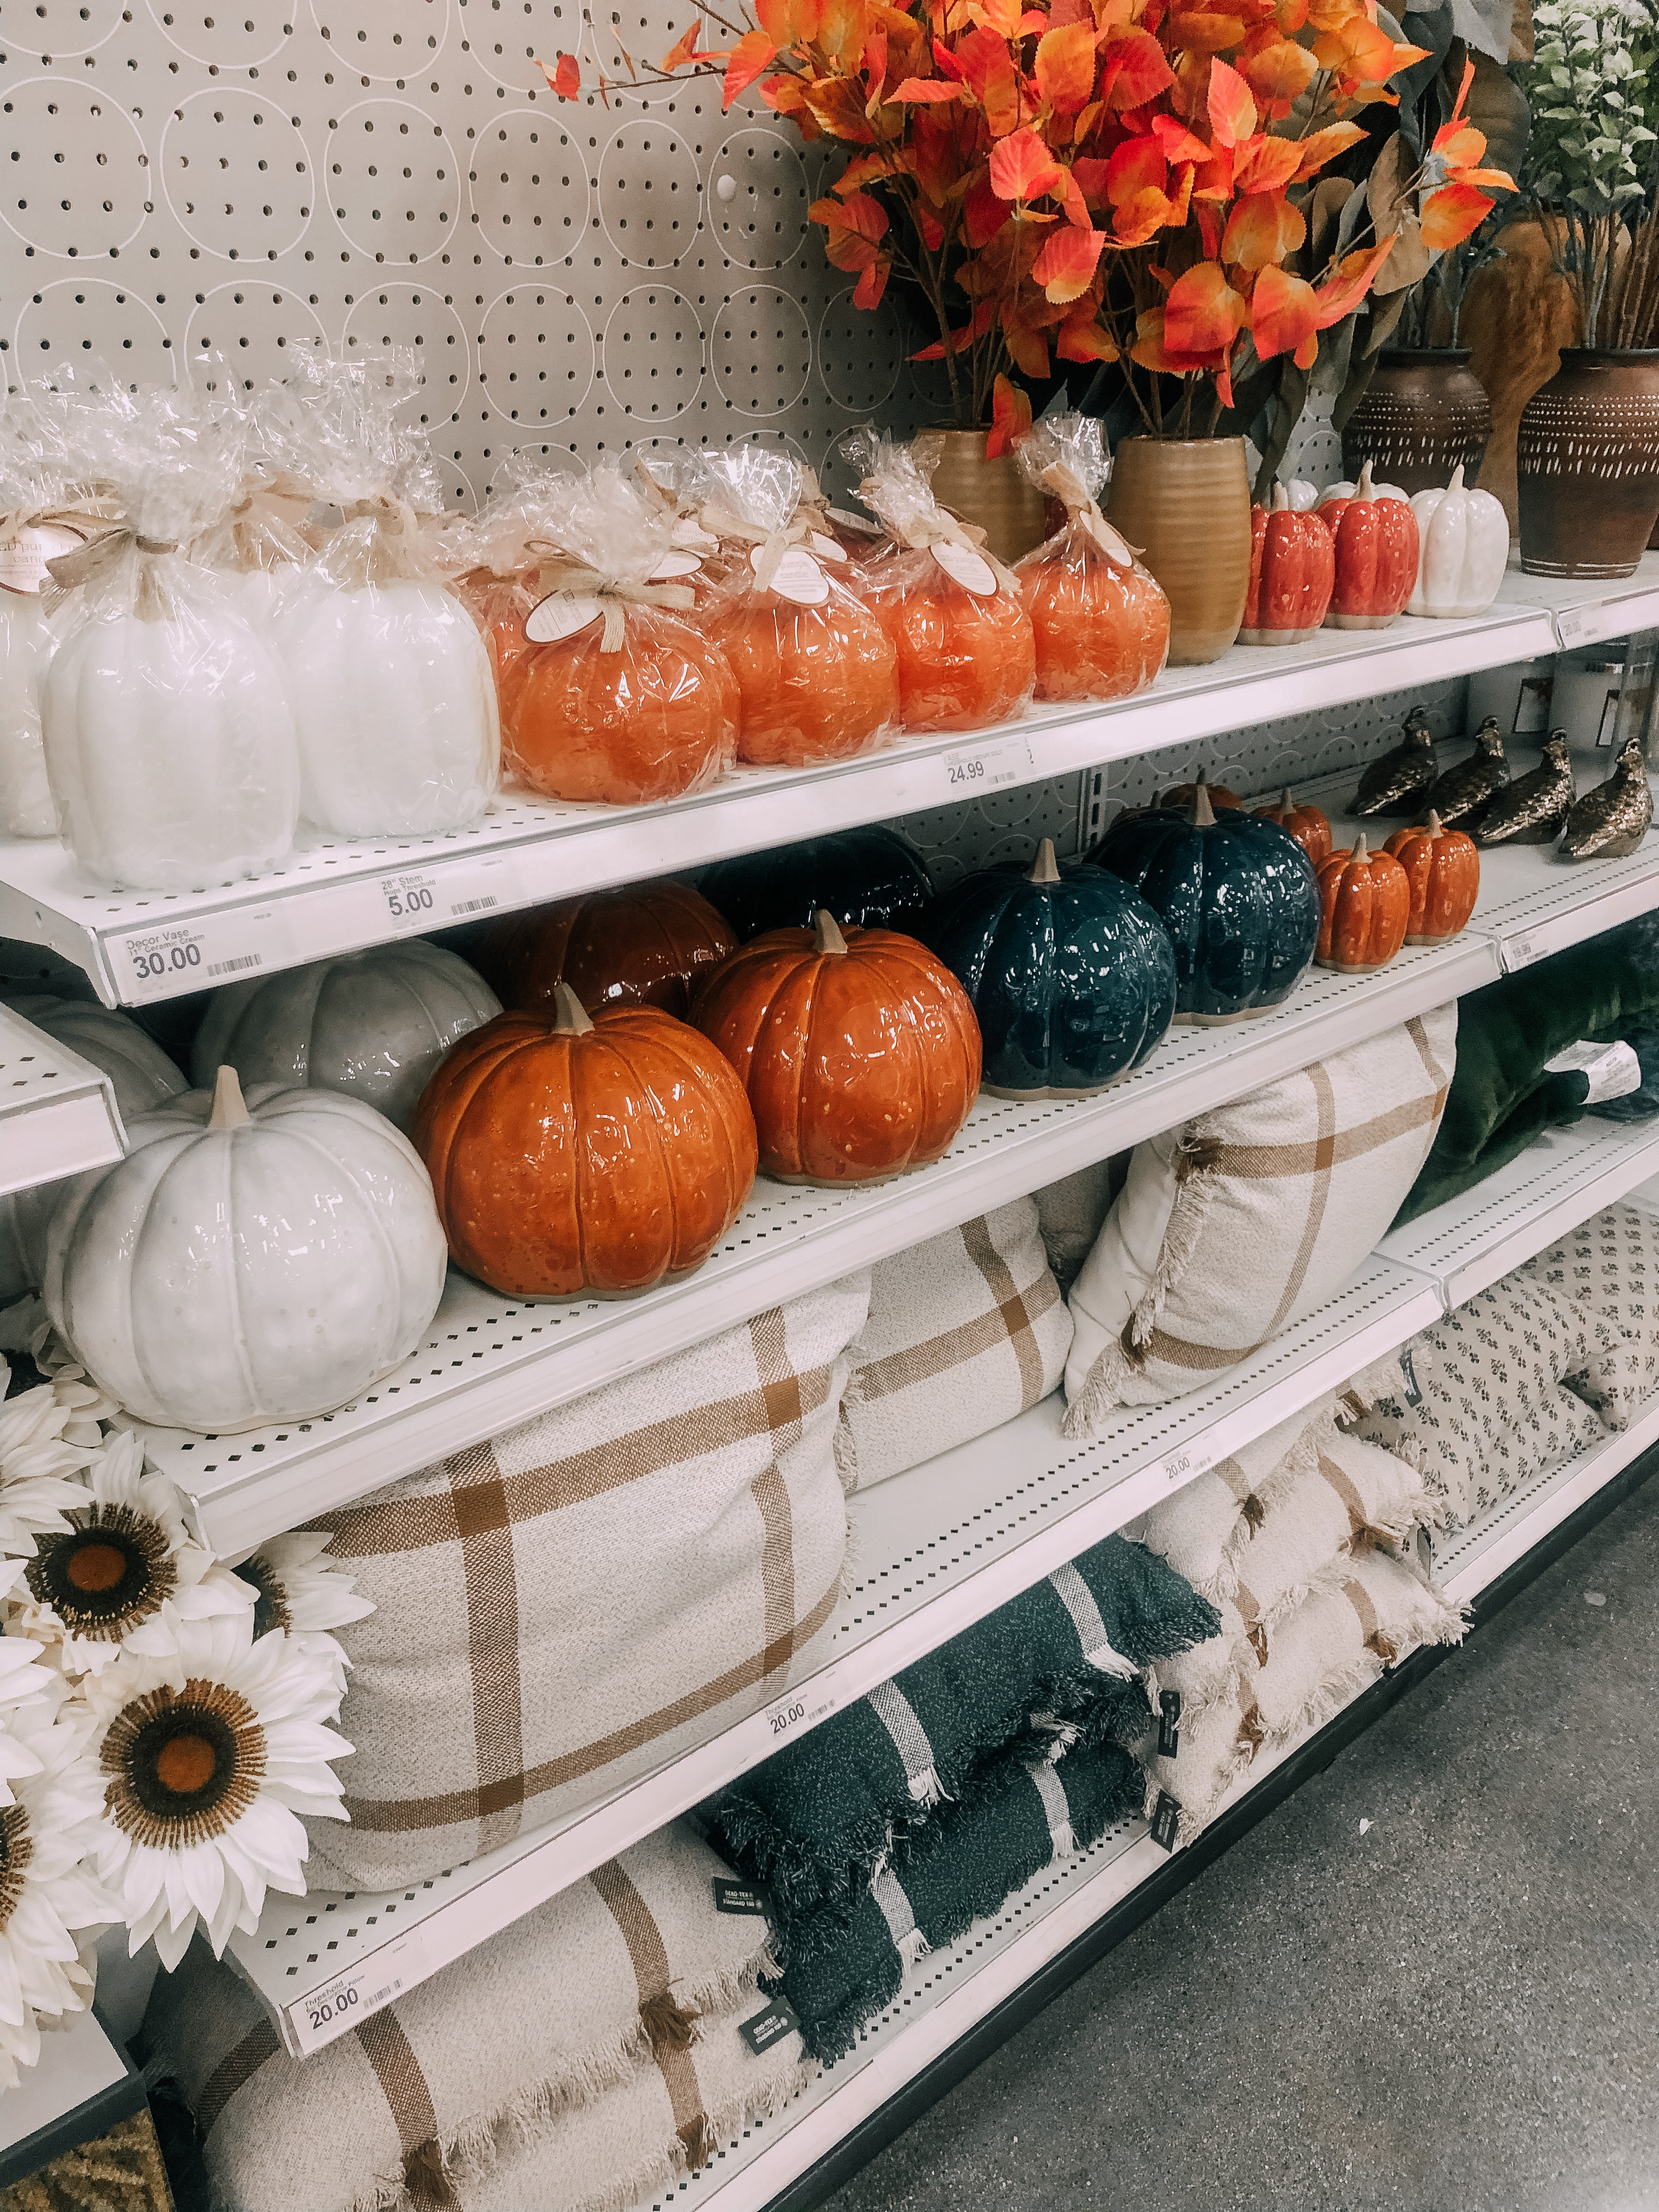 Fall candles, decorative pumpkins, throw pillows for fall.